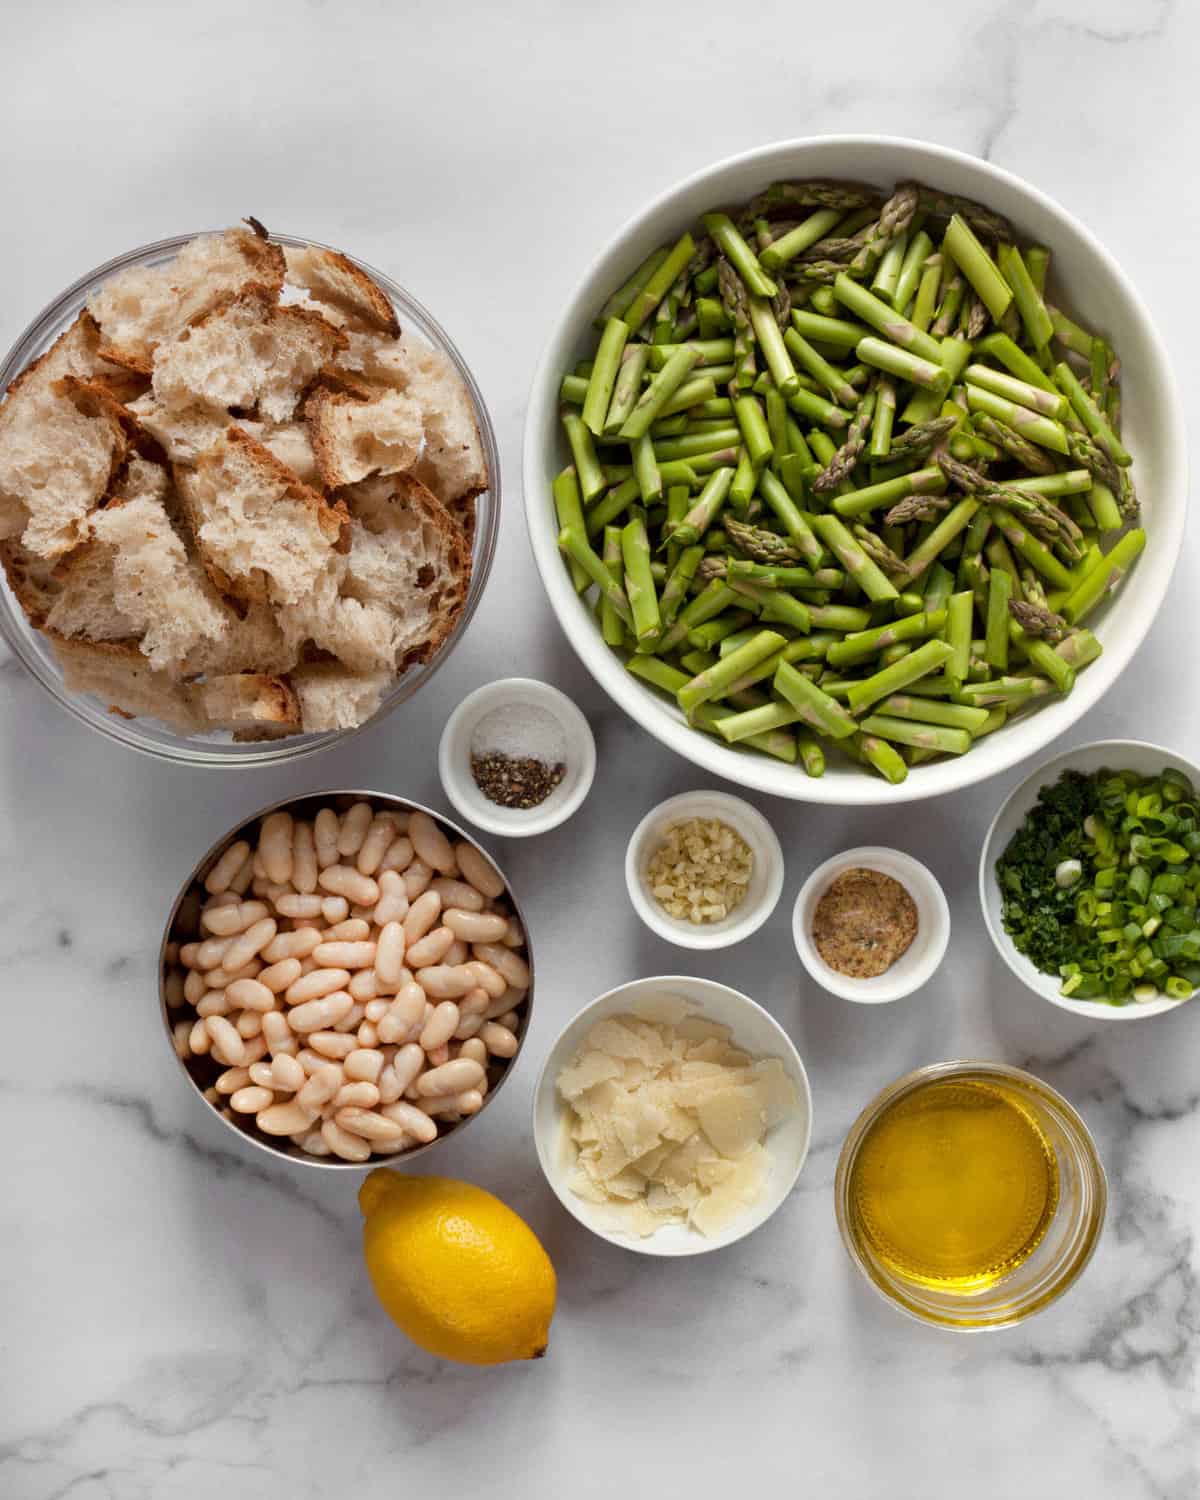 Ingredients including asparagus, bread, white beans, lemon, parmesan, garlic, salt, pepper and olive oil.